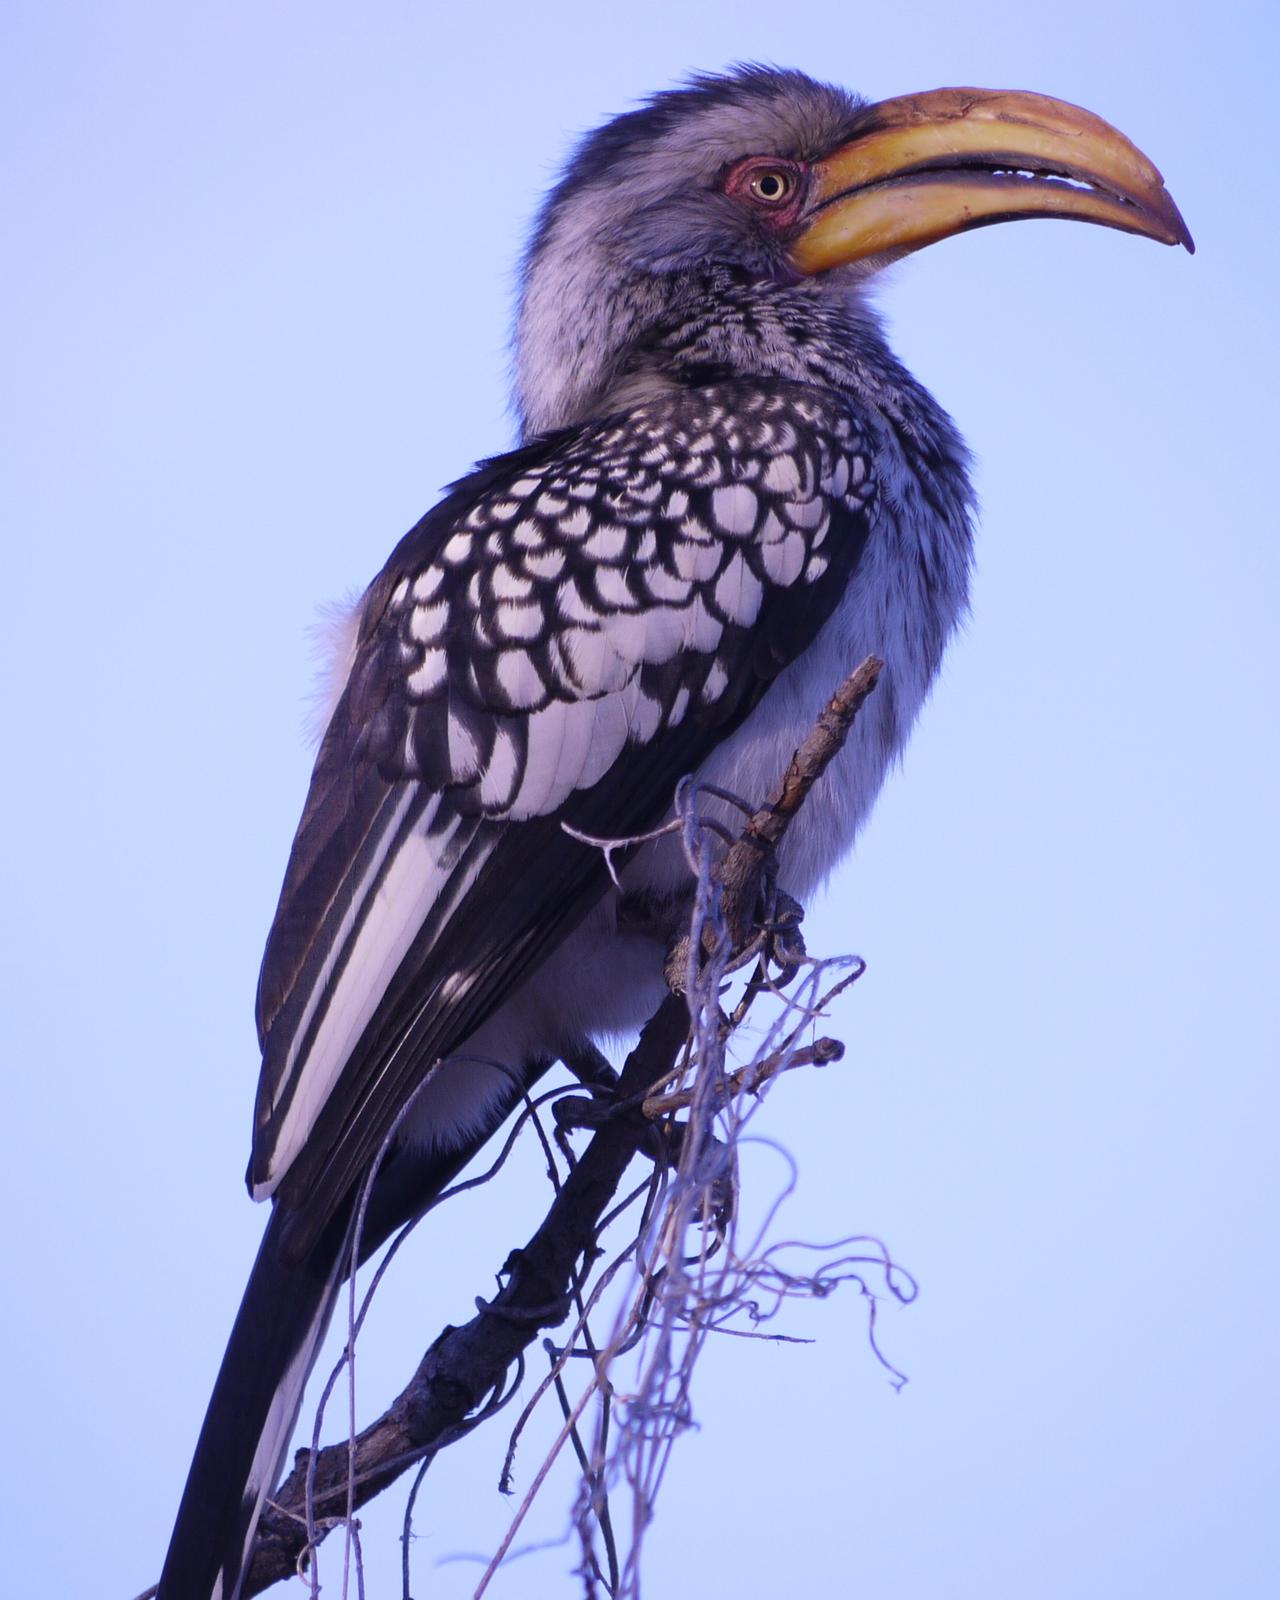 Eastern Yellow-billed Hornbill Photo by Peter Lowe